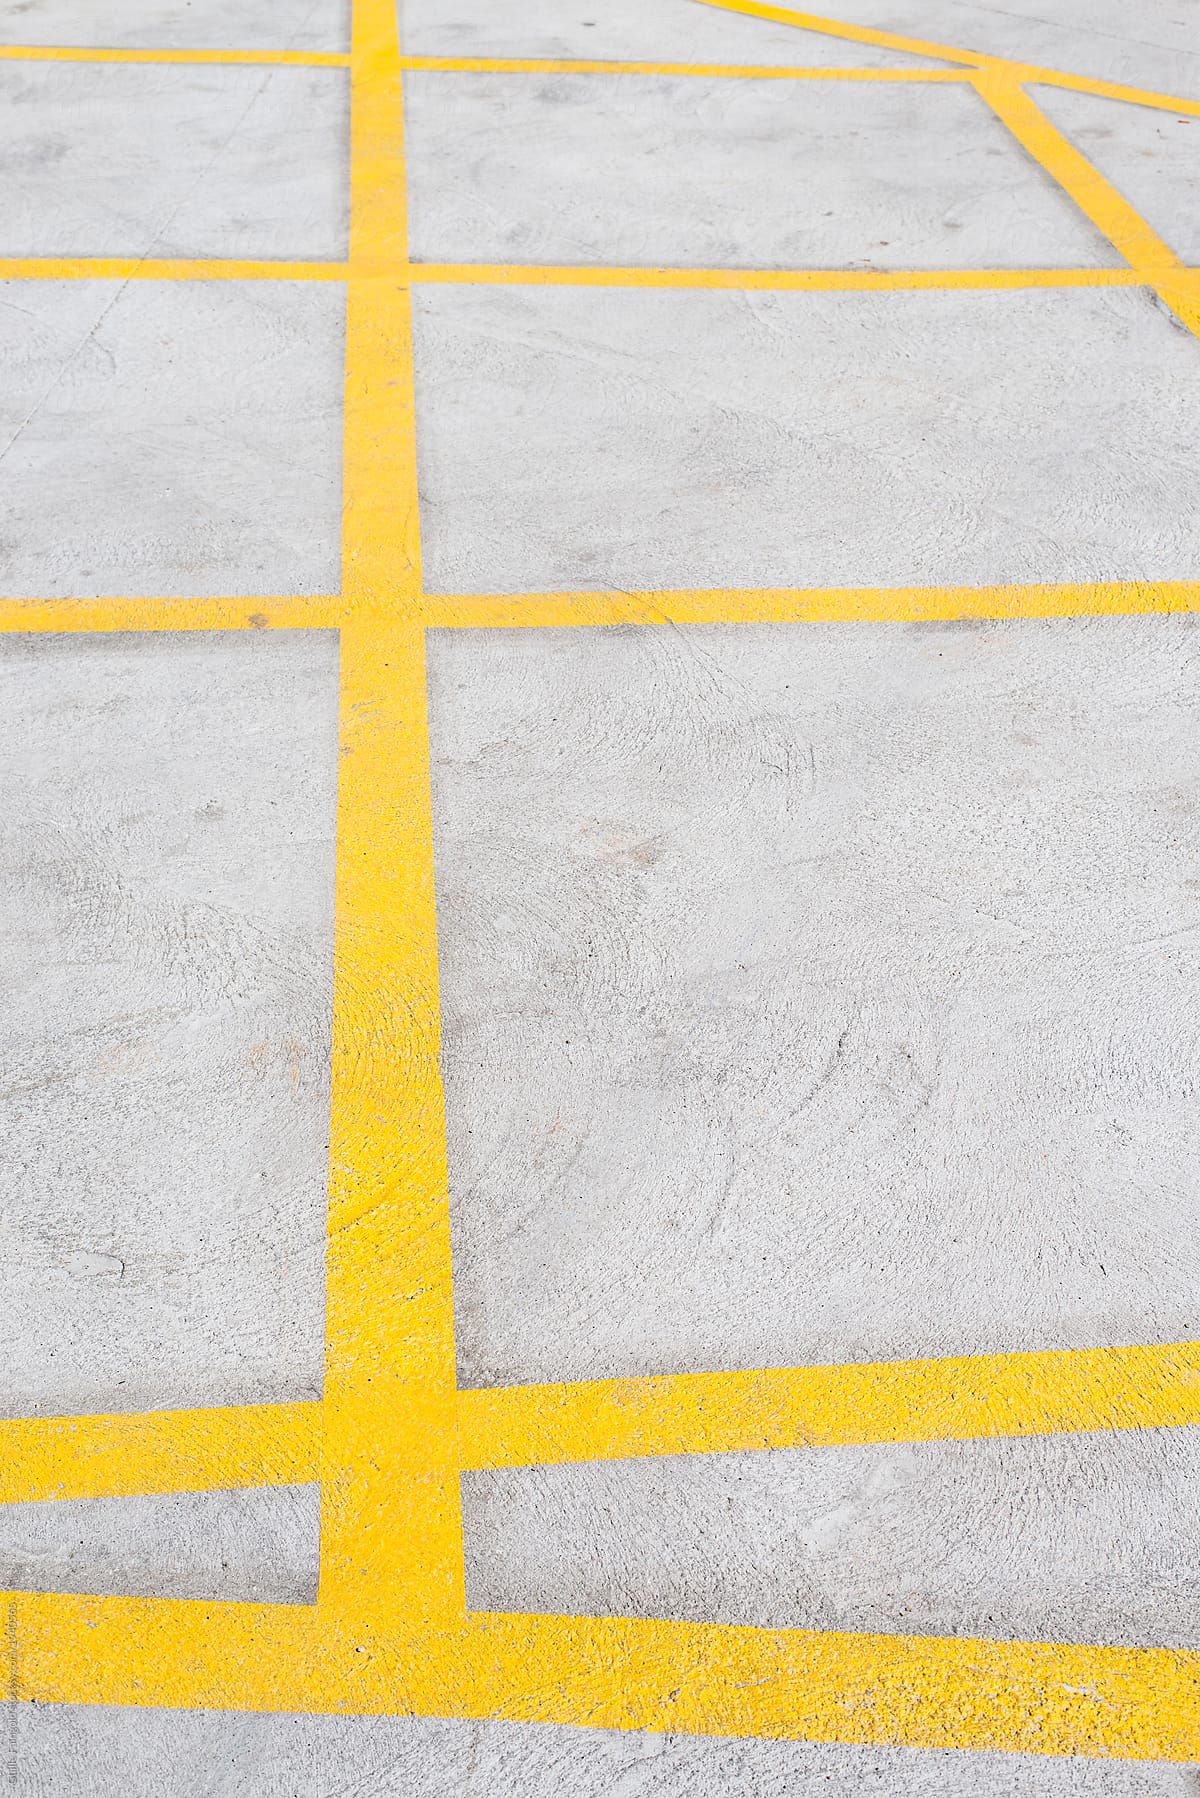 Yellow road marking on asphalt